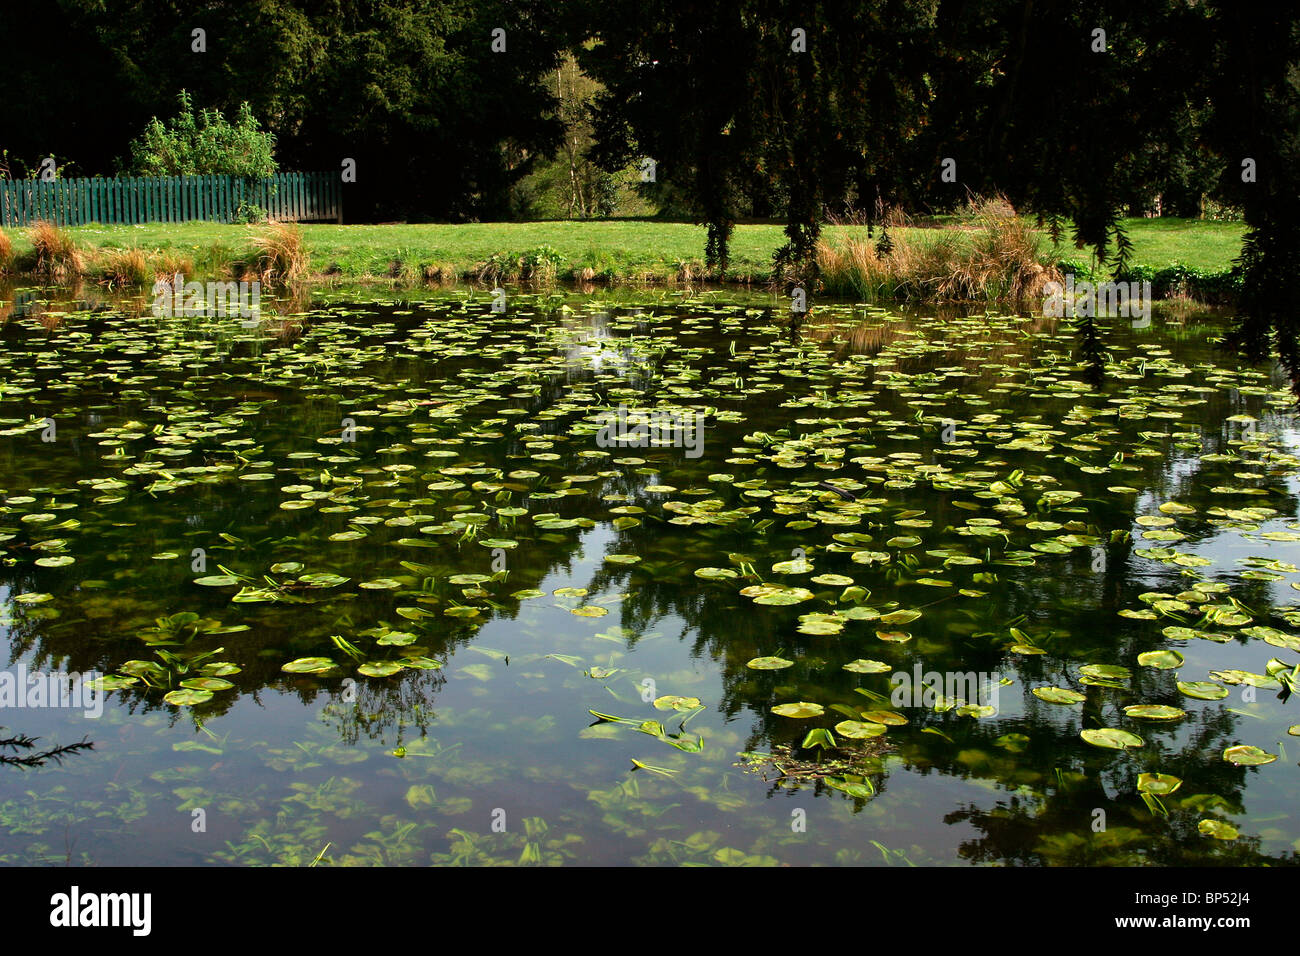 UK, England, Cheshire, Stockport, Marple Bridge, Brabyn's Park lily pond Stock Photo